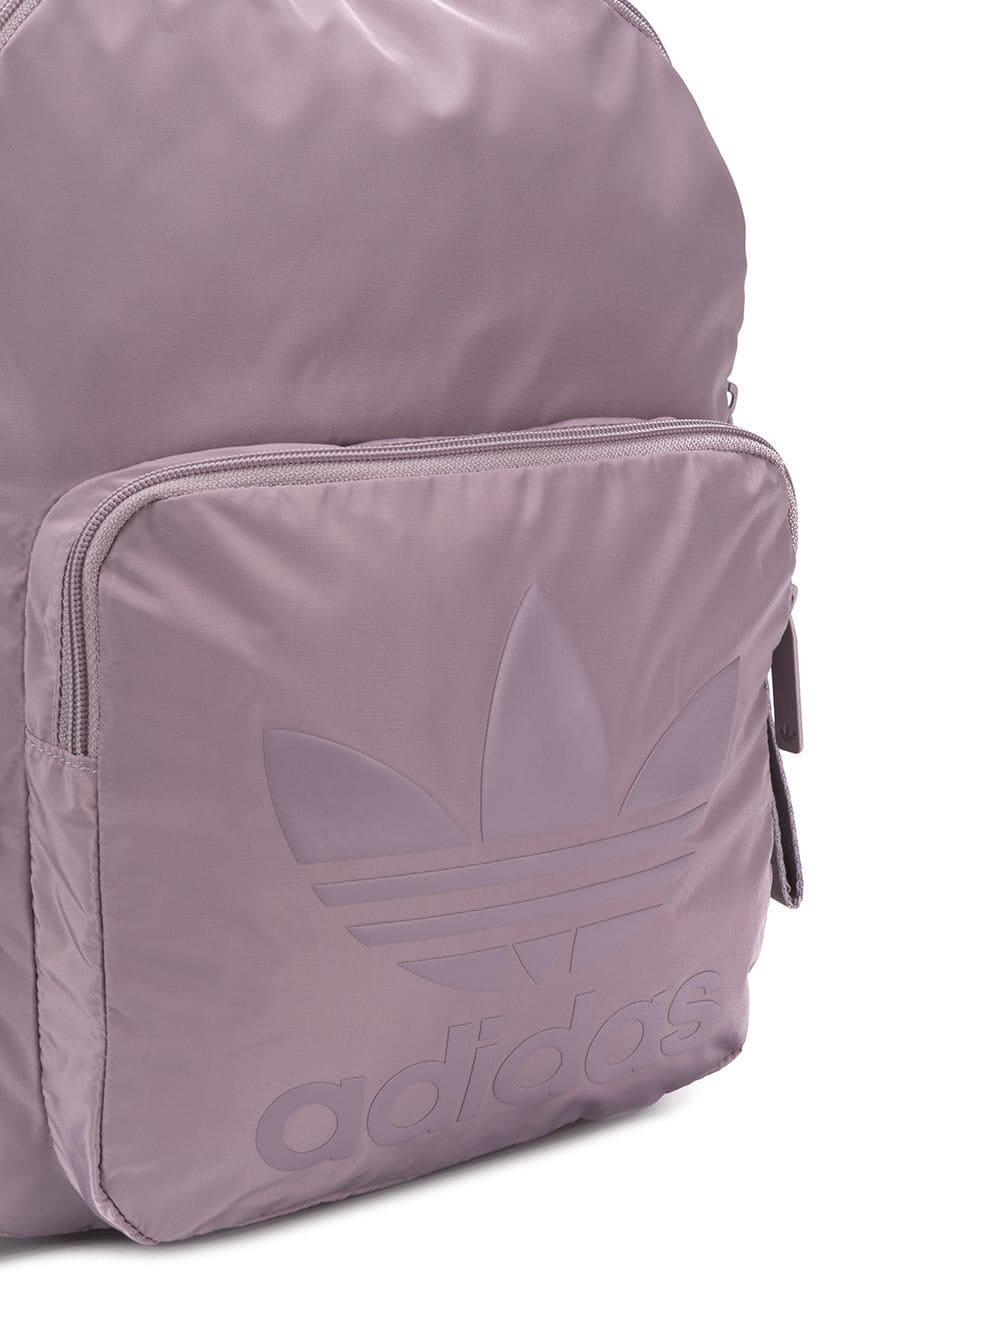 adidas Medium Classic Backpack in Purple - Lyst